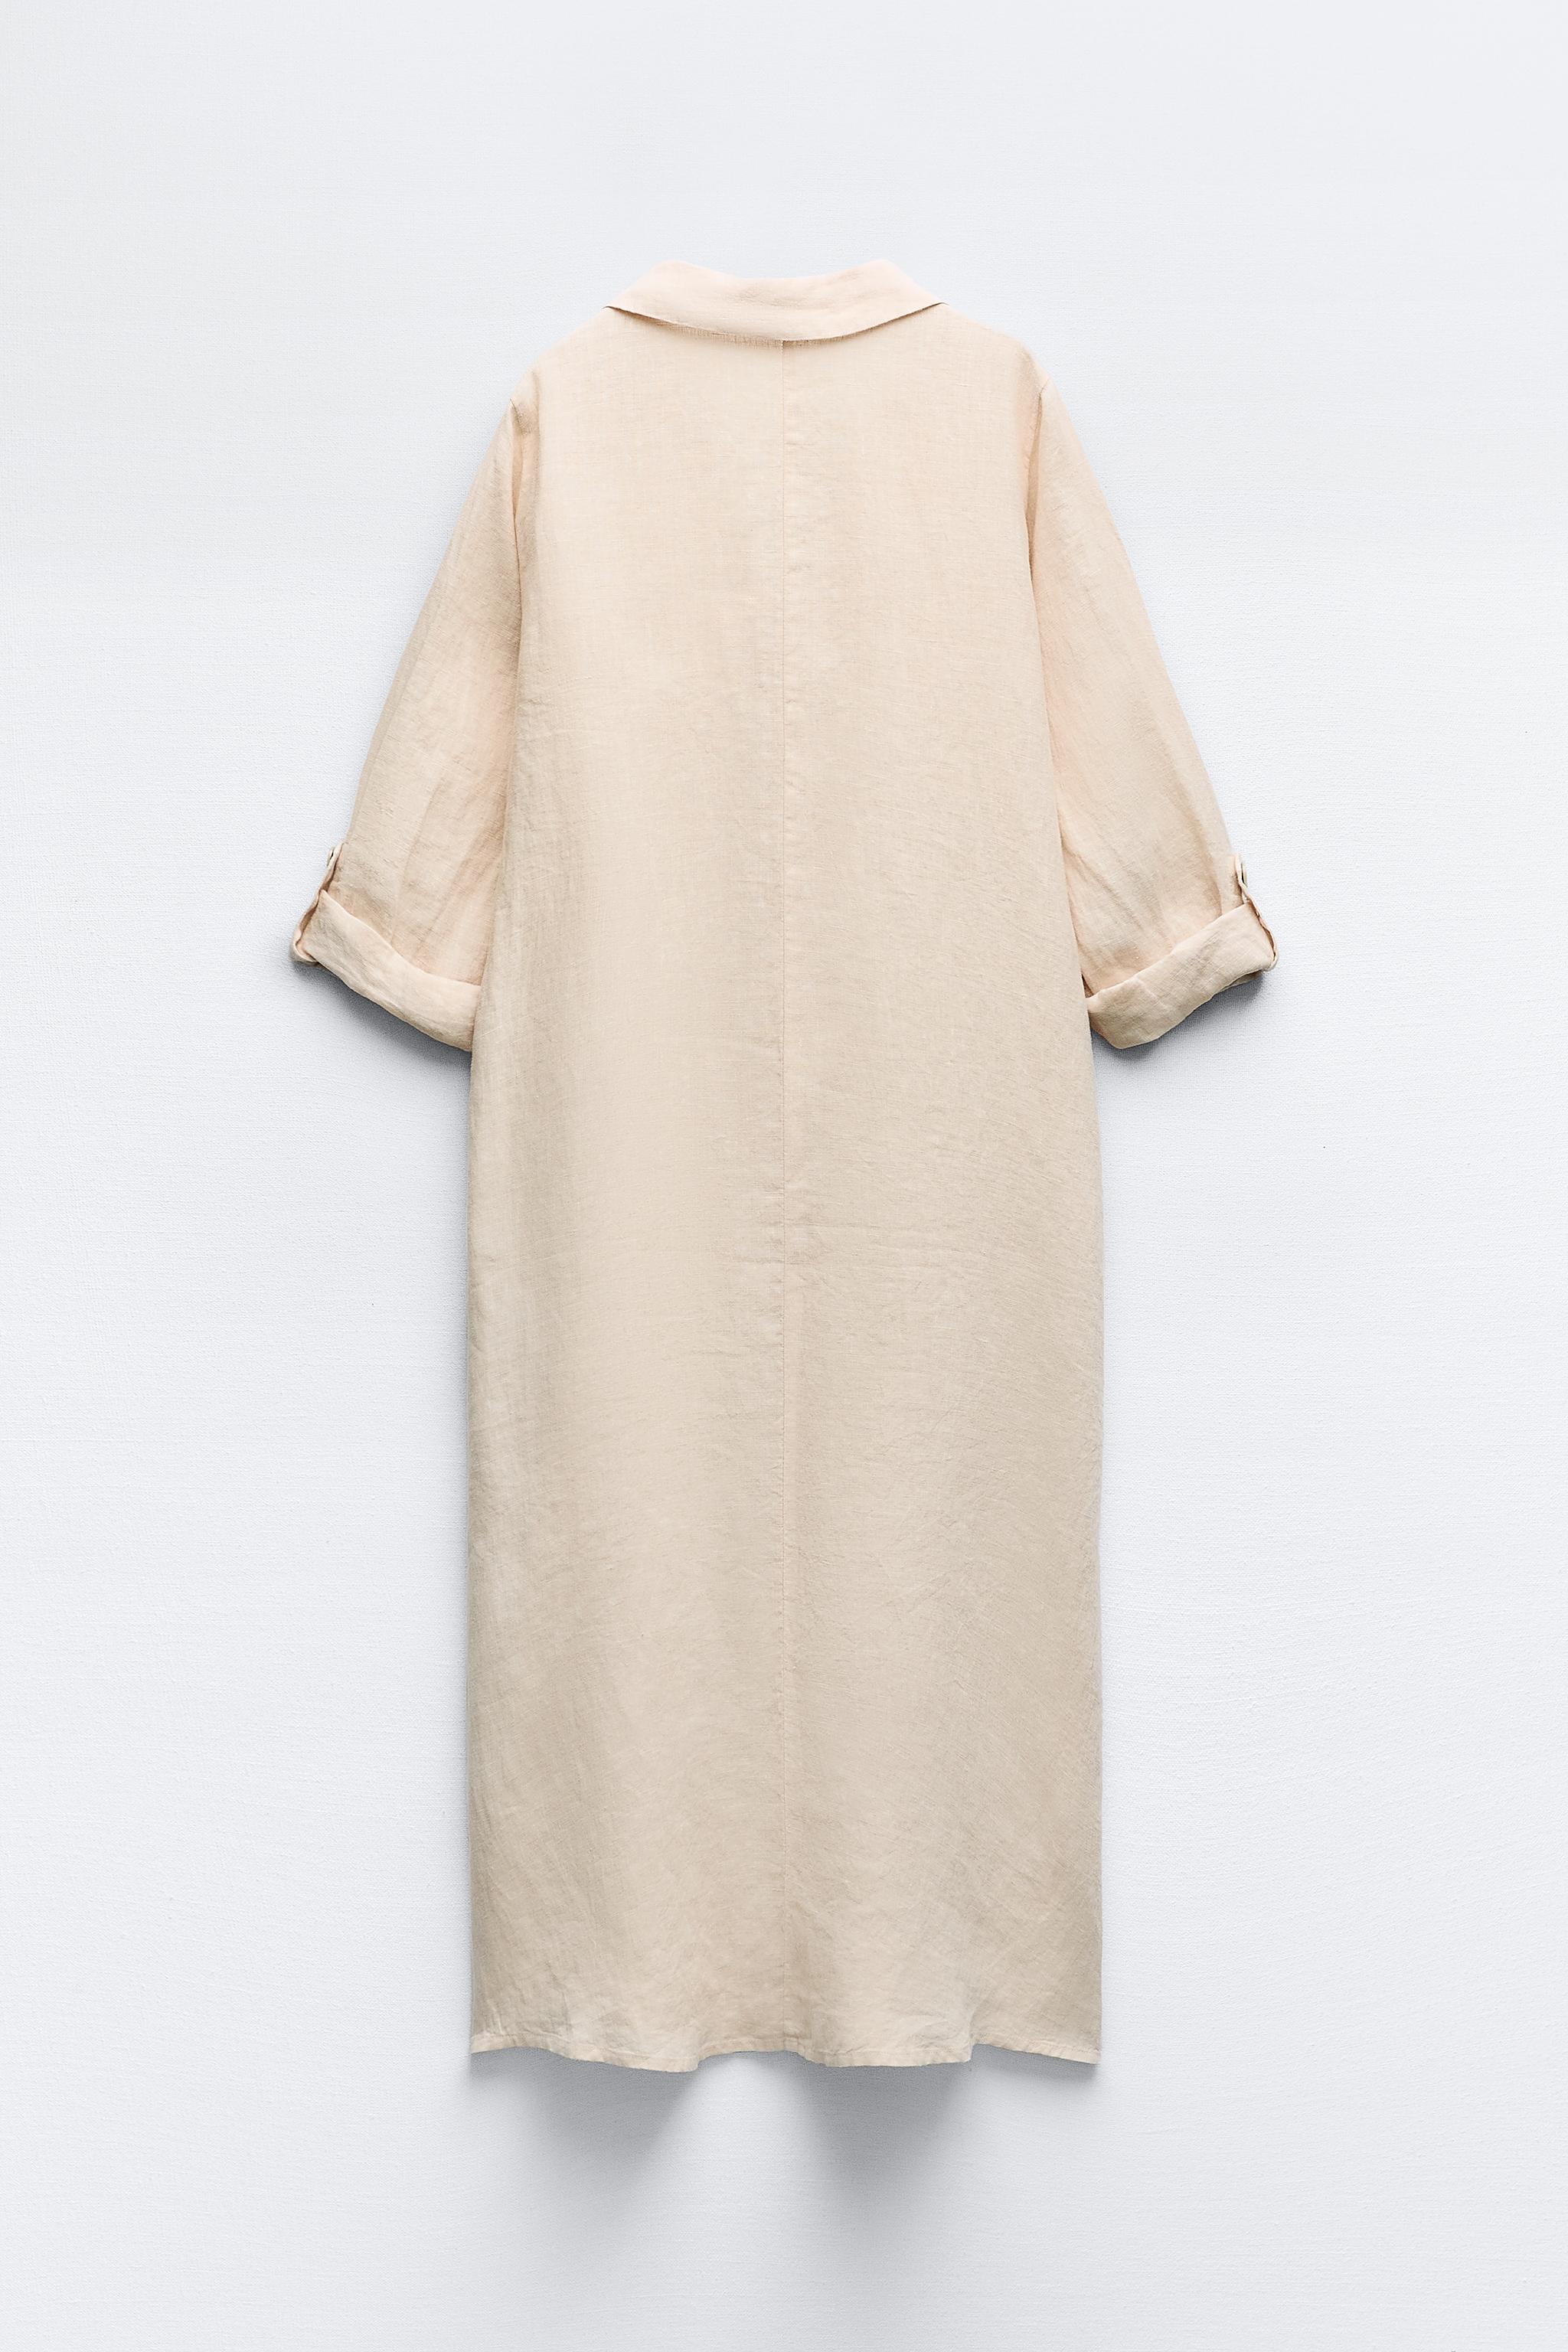 Women's Linen Collection, ZARA United States